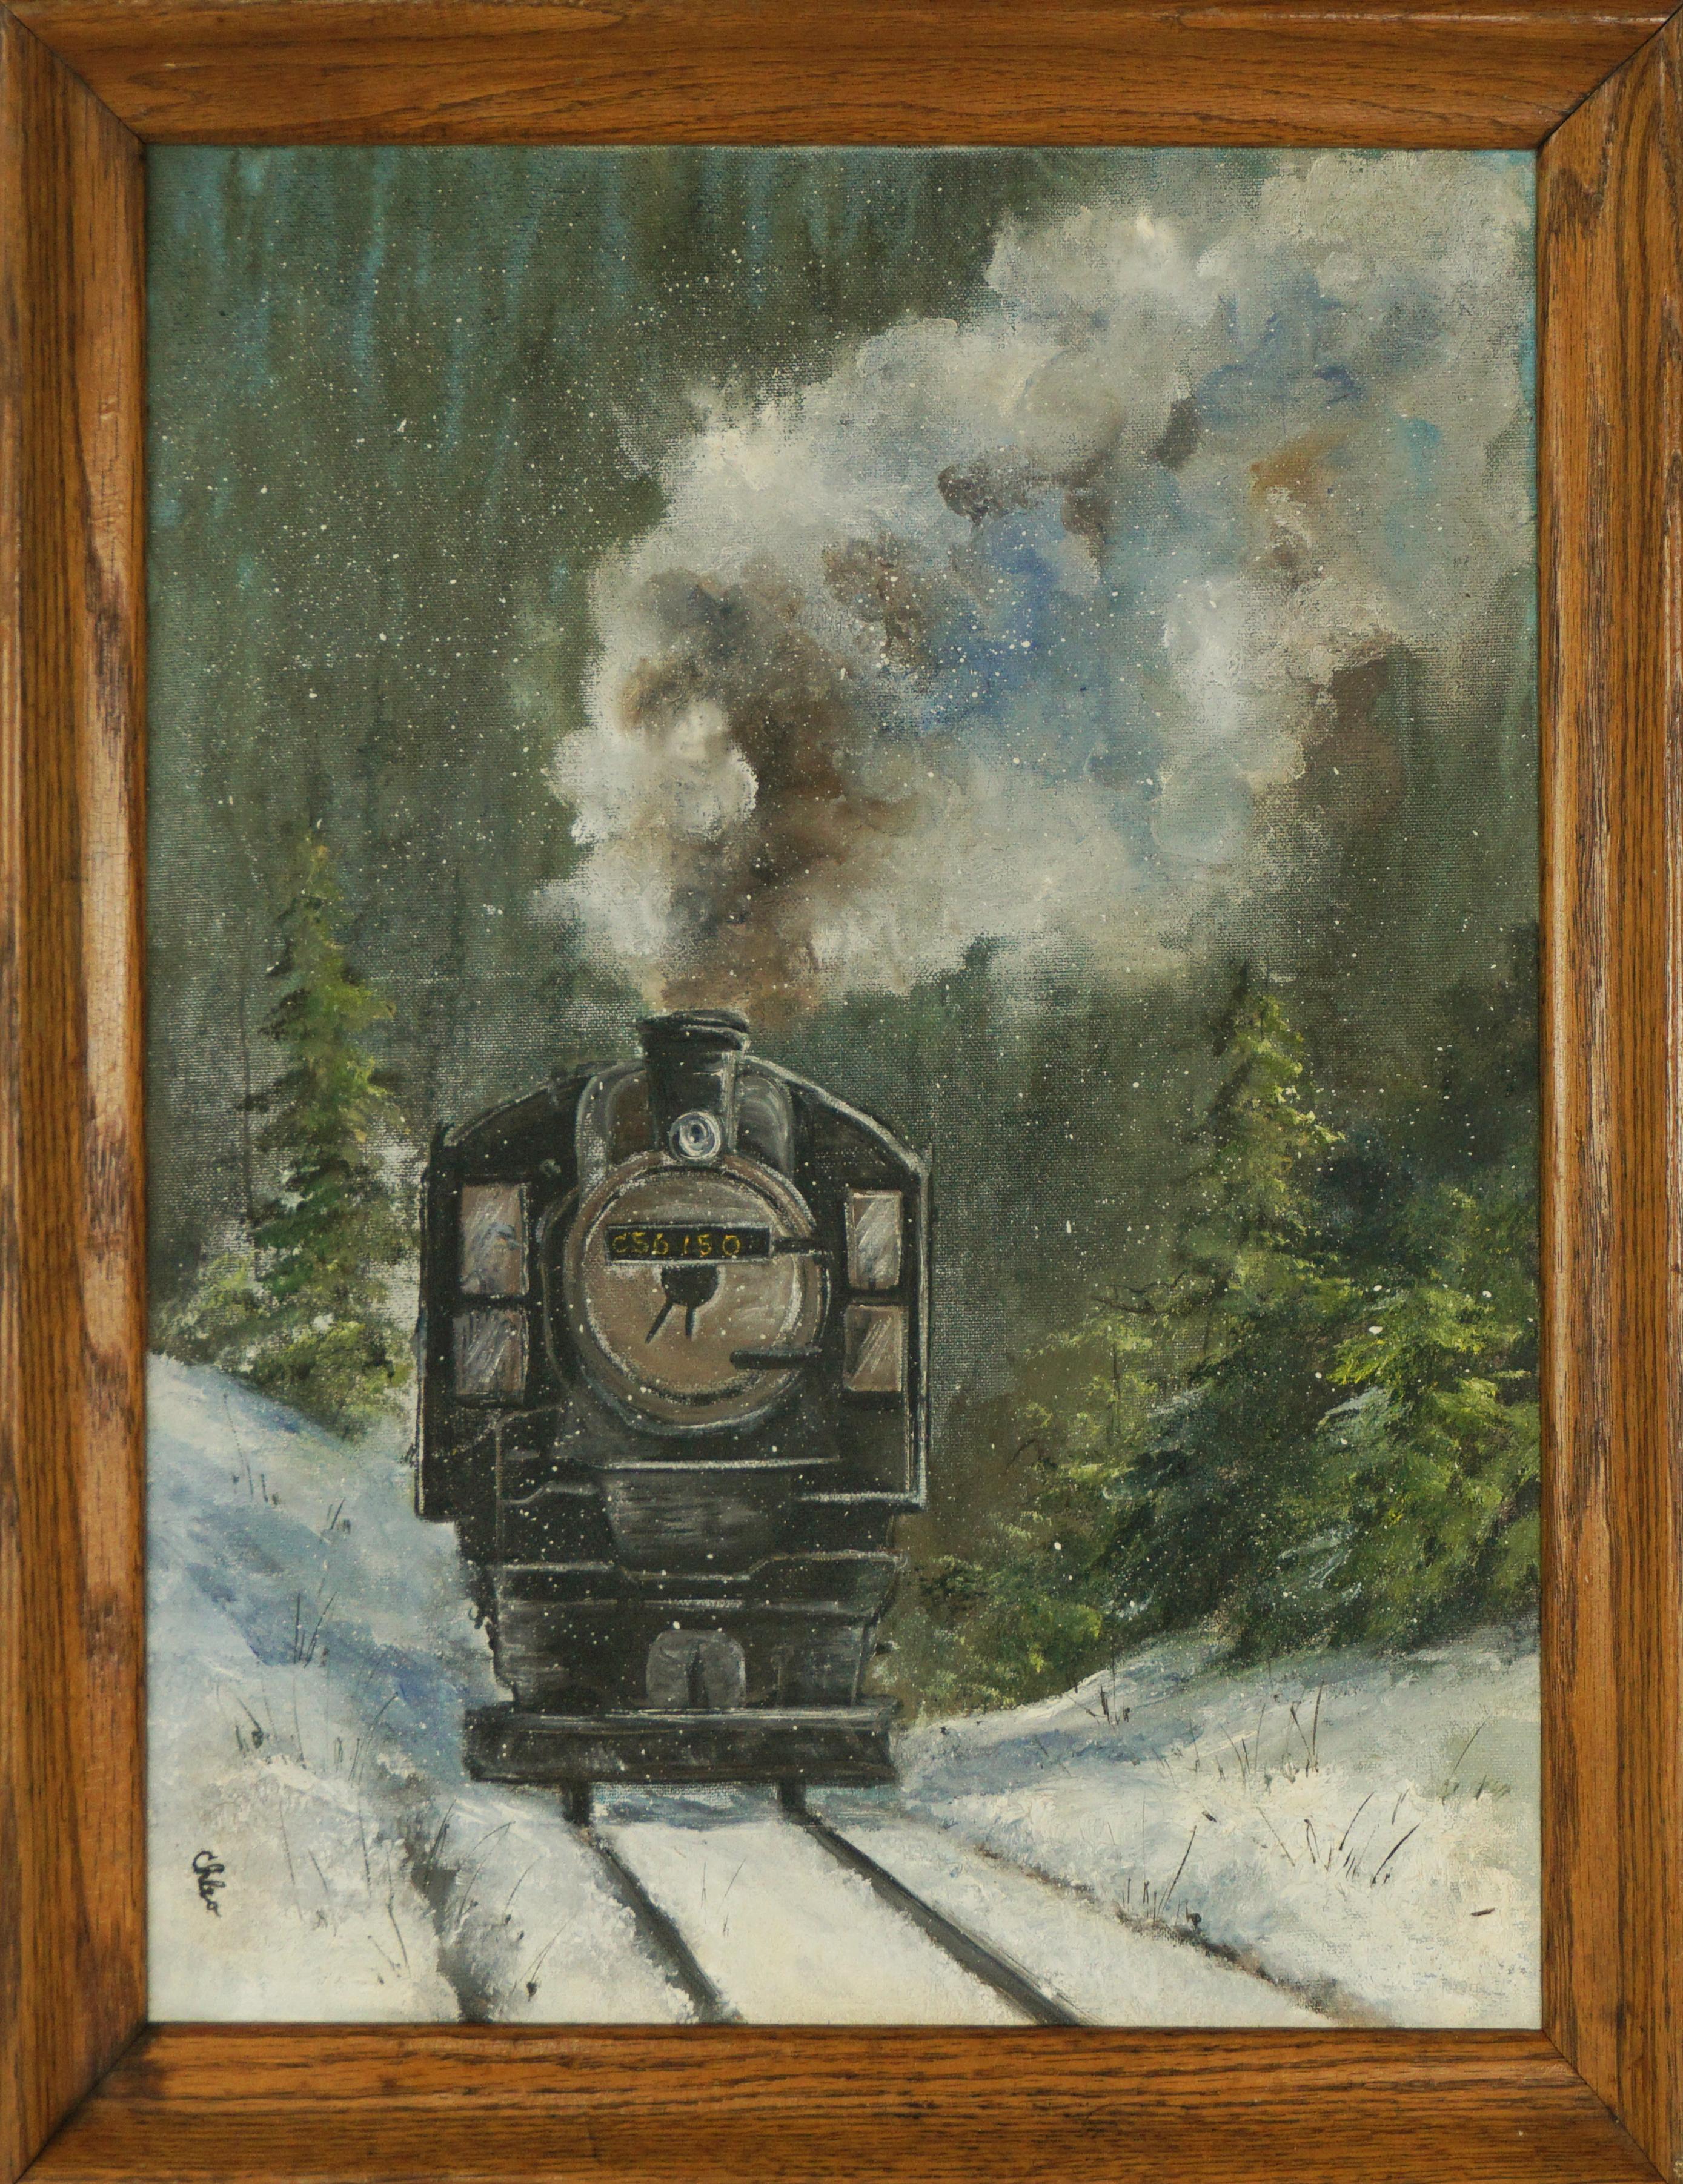 Unknown Landscape Painting - Steam Locomotive Train in Winter, Snowy Nocturnal Landscape